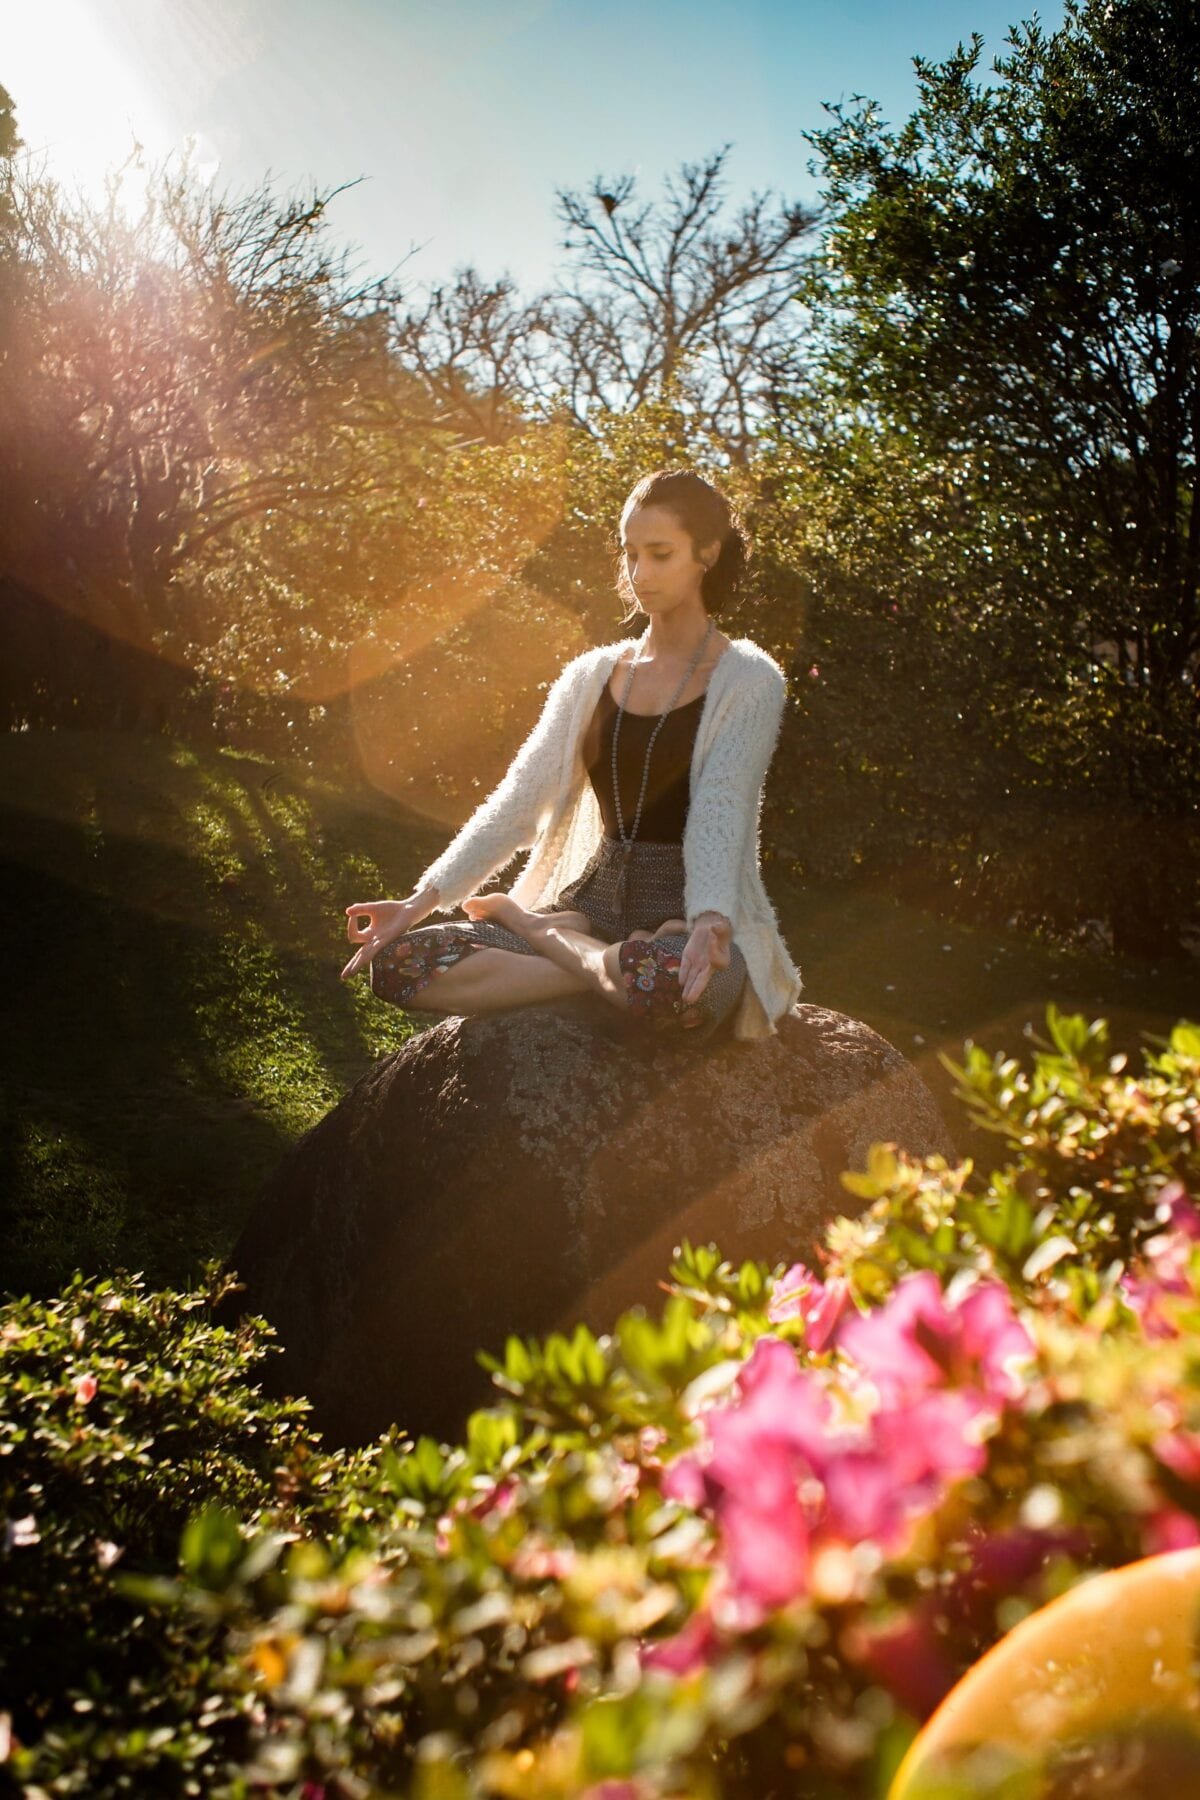 girl meditating on a rock